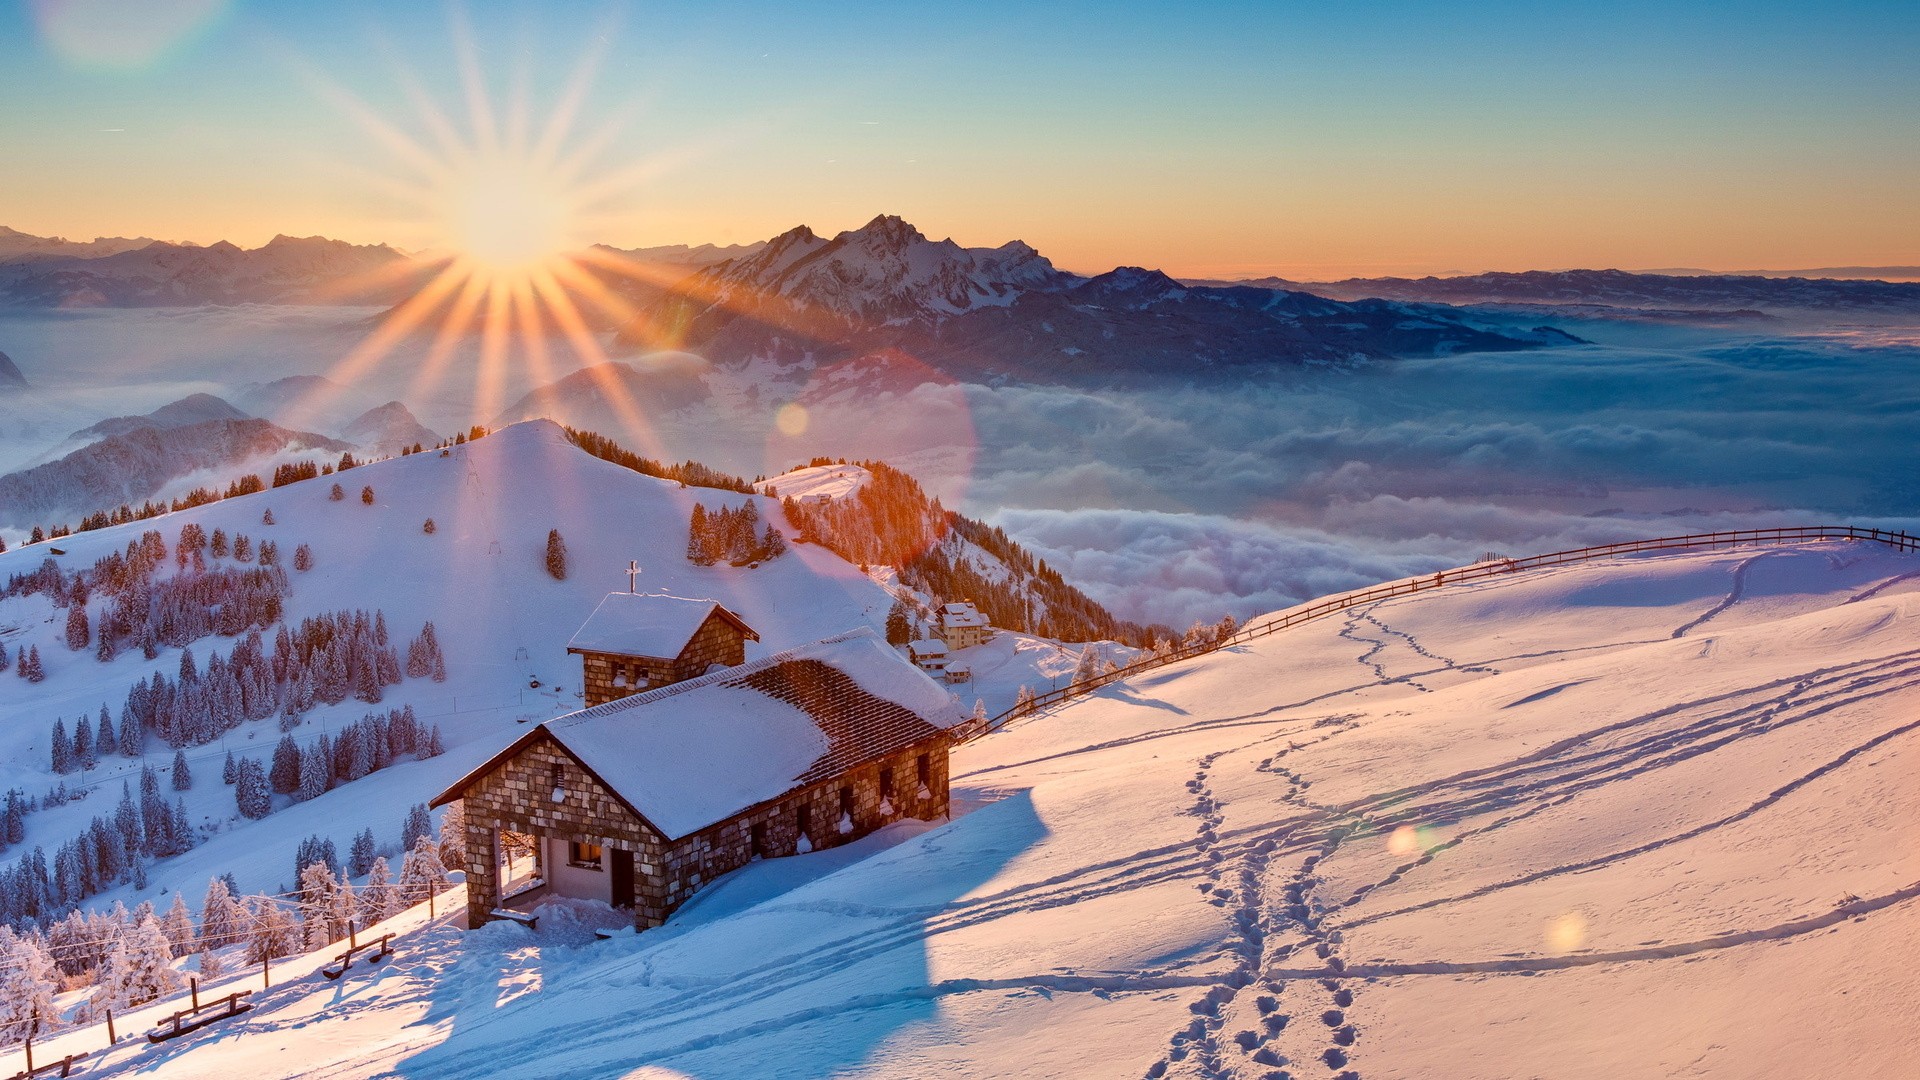 General 1920x1080 landscape snow mountains cabin Switzerland nature winter sunlight Alps Sun house